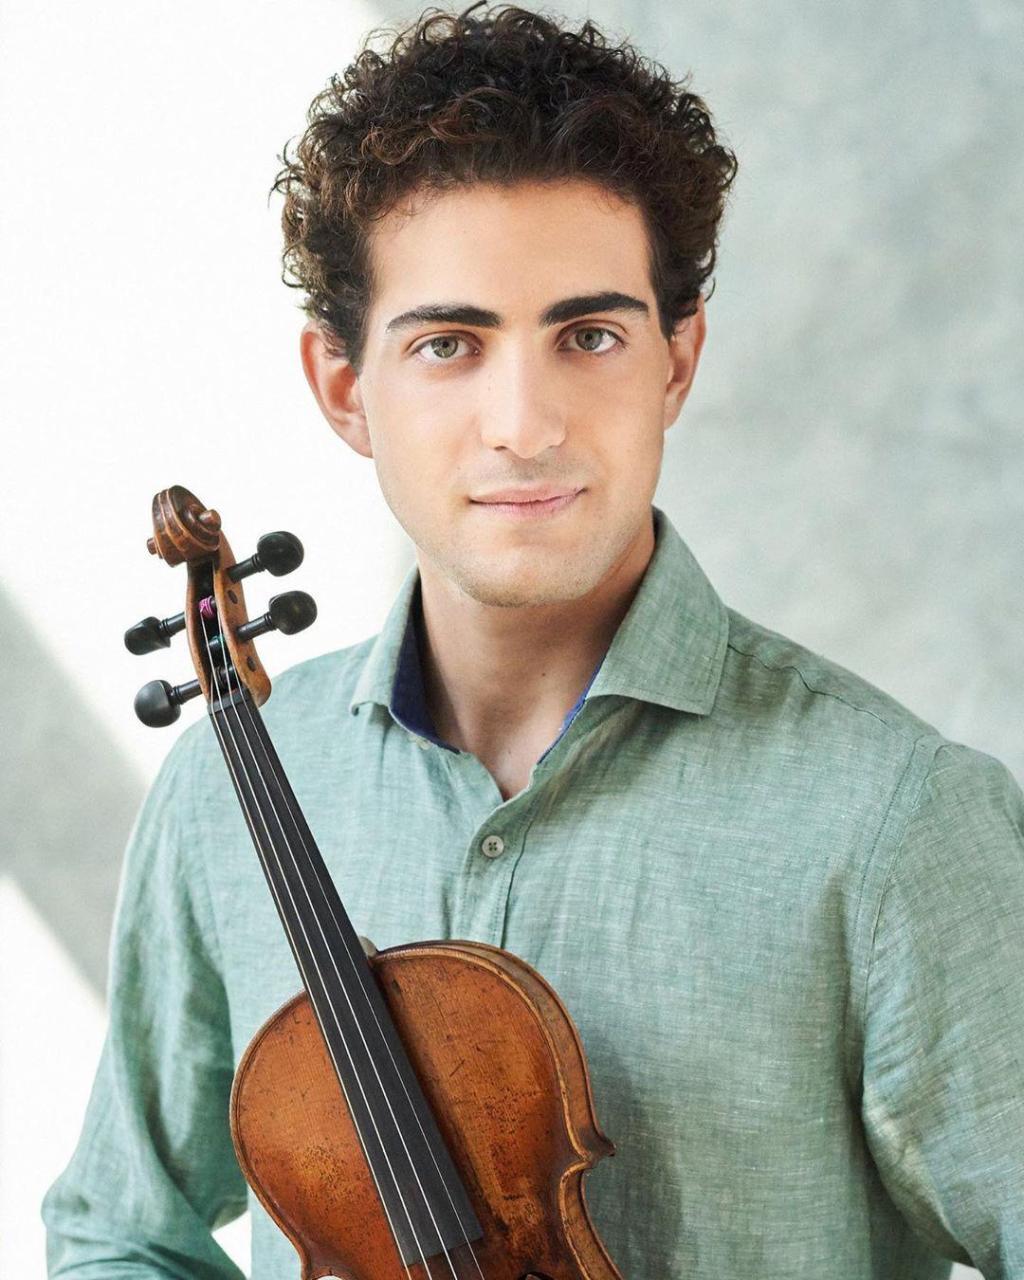 National violinist awarded in Turkey